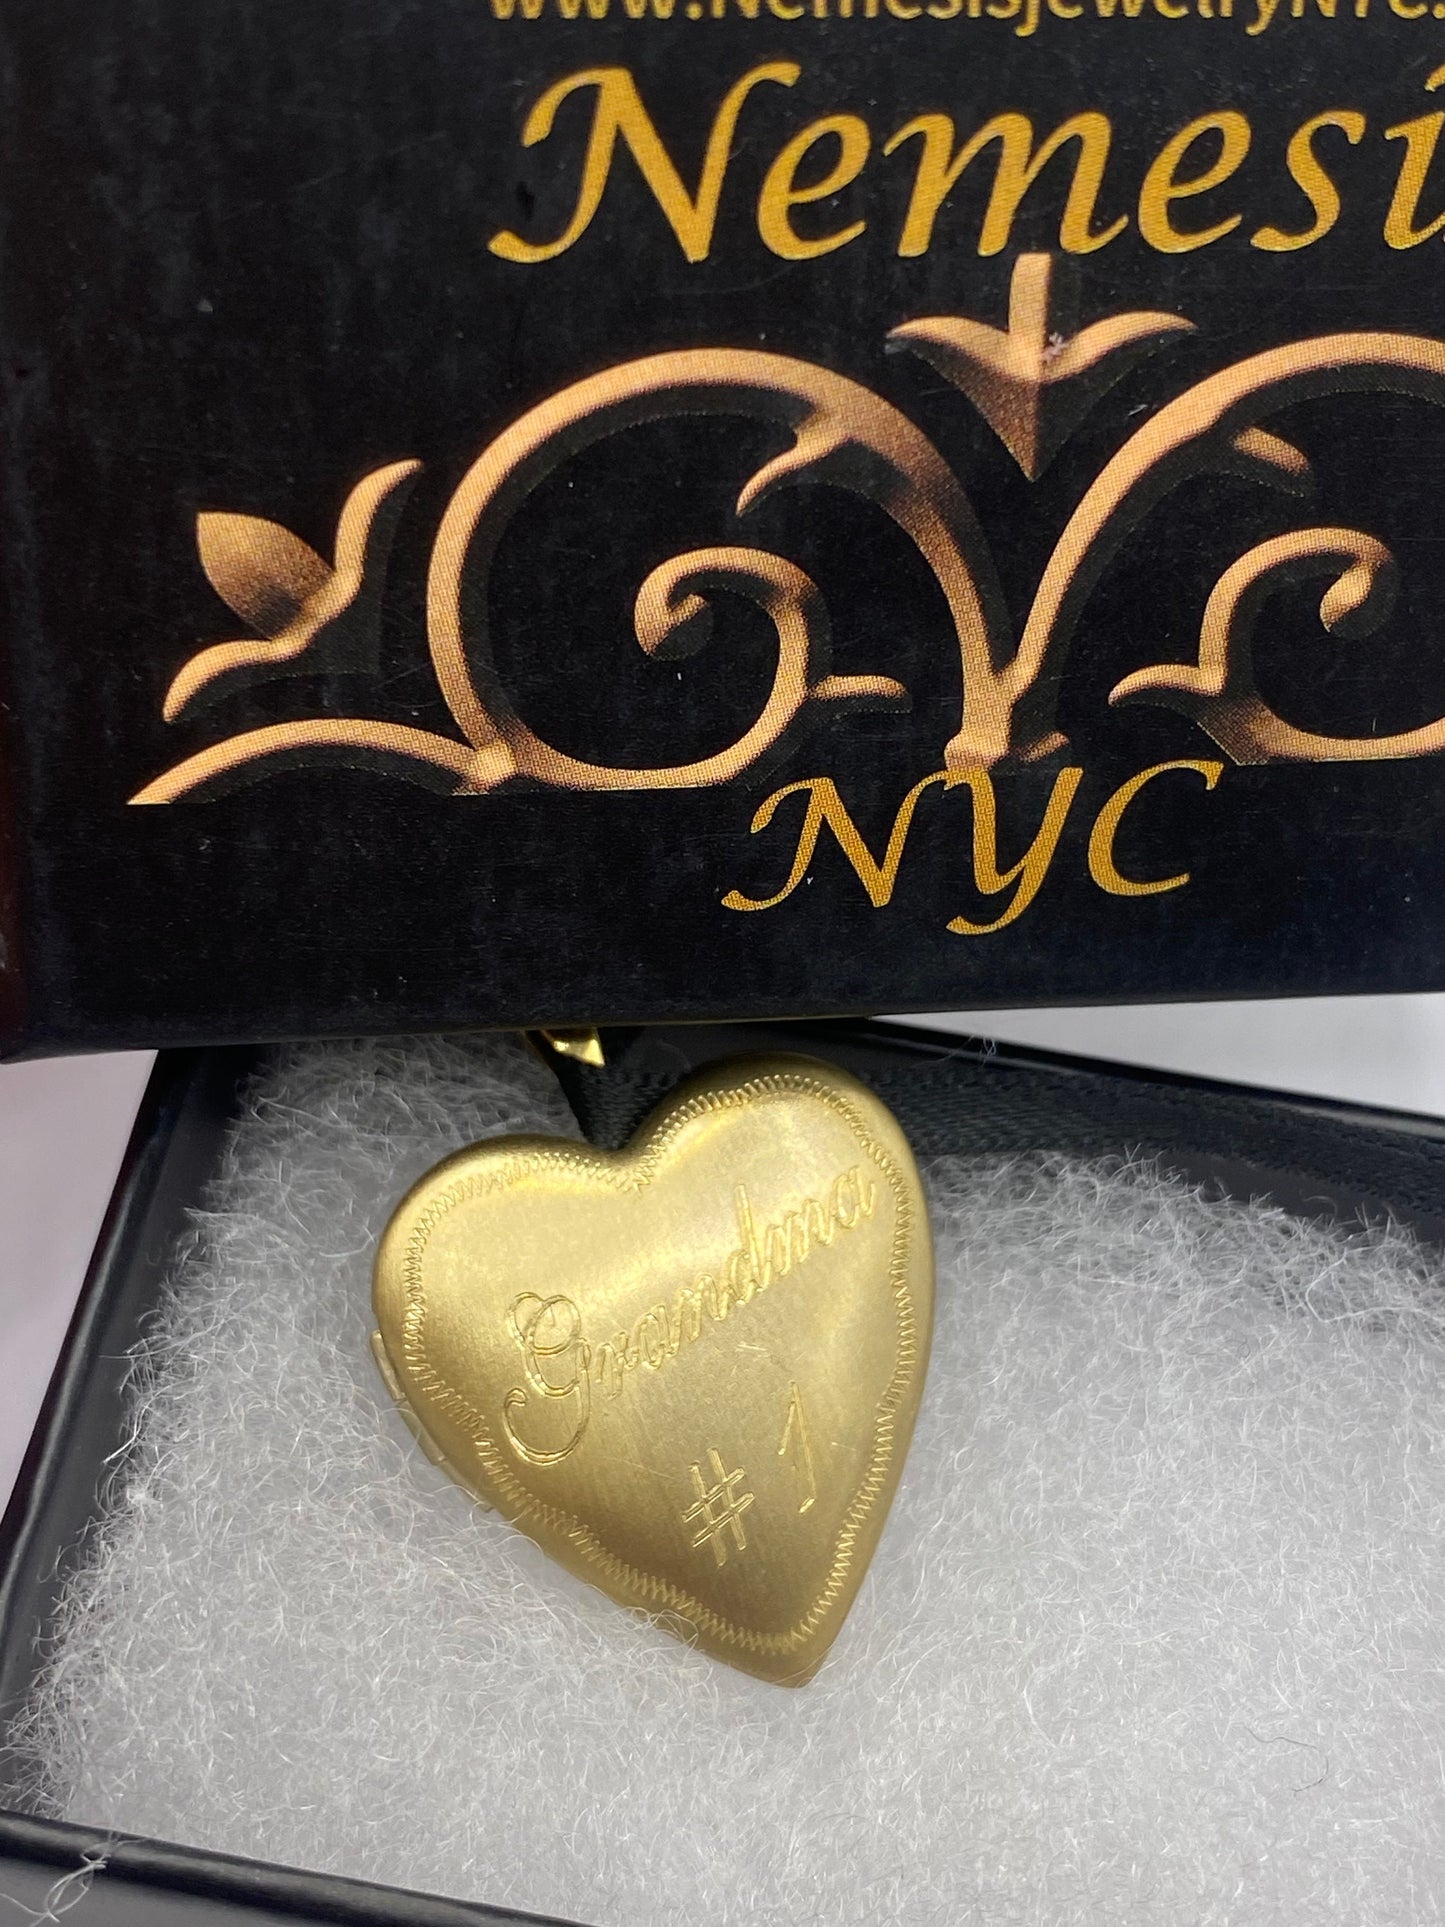 Vintage Gold Locket | Tiny Heart 9k Gold Filled Pendant Photo Memory Charm Engraved #1 Grandma | Choker Necklace